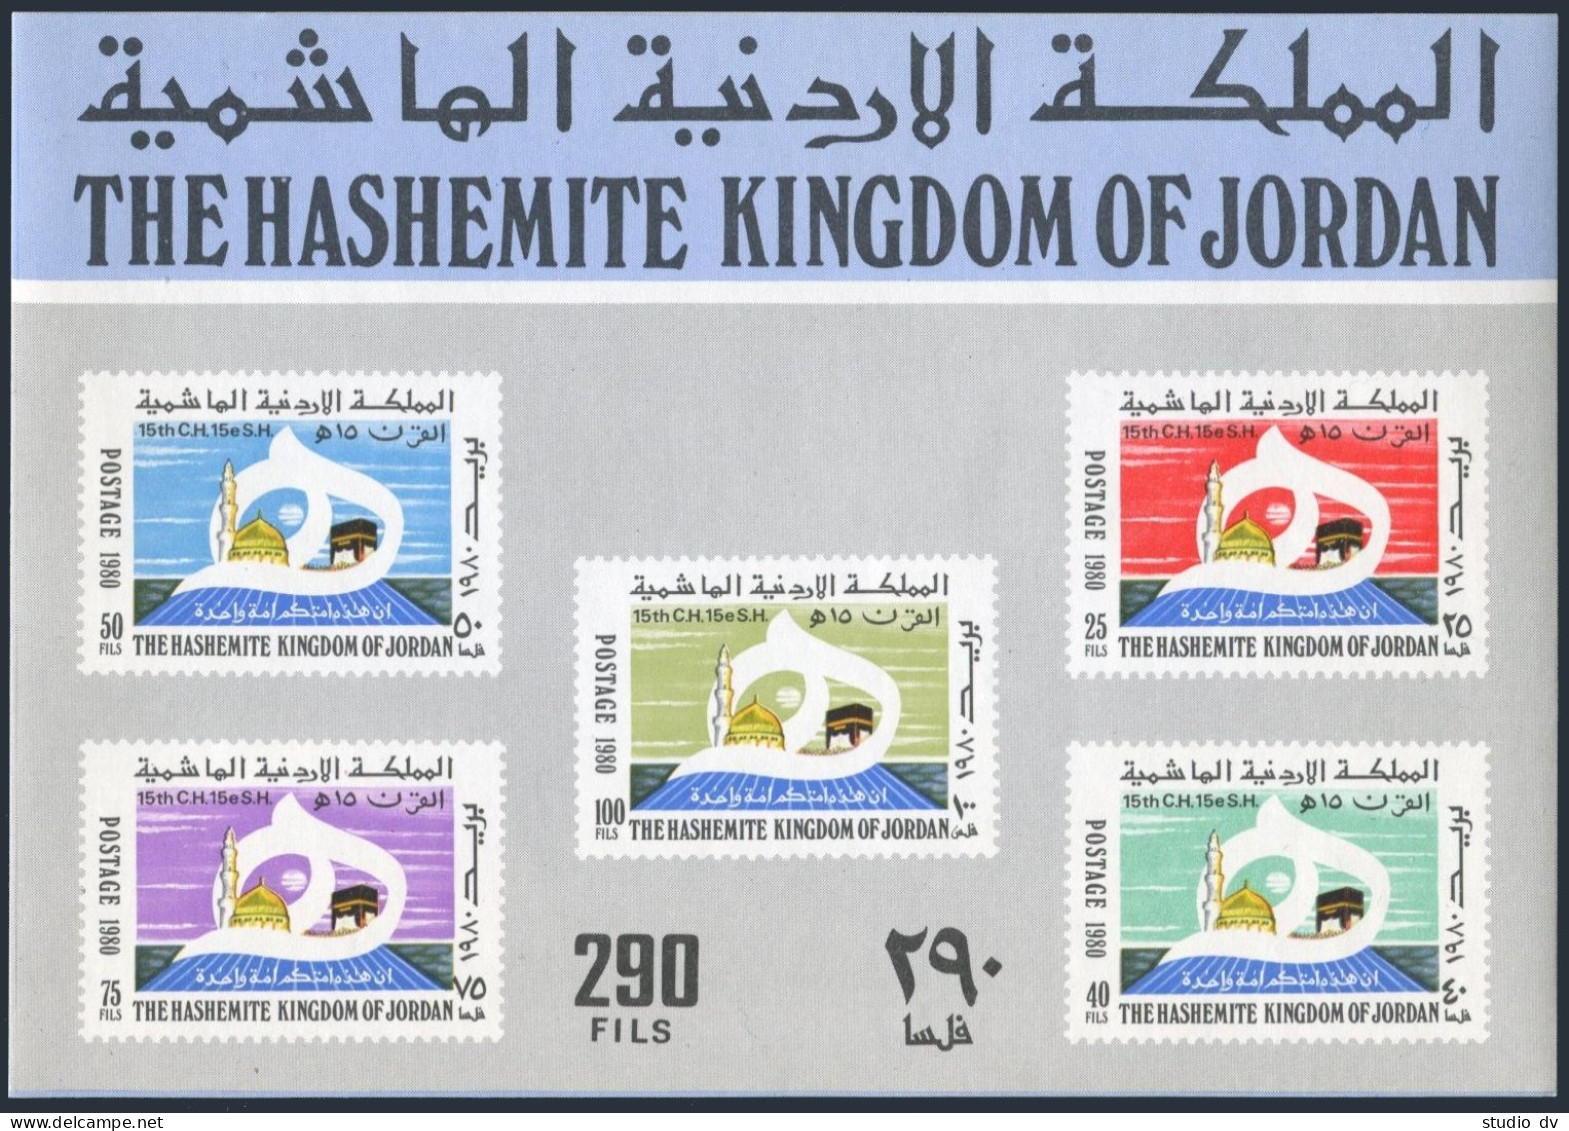 Jordan 1073 Sheet, MNH. Michel Bl.43. Pilgrimage Year, 1980. Mosque. - Jordanien